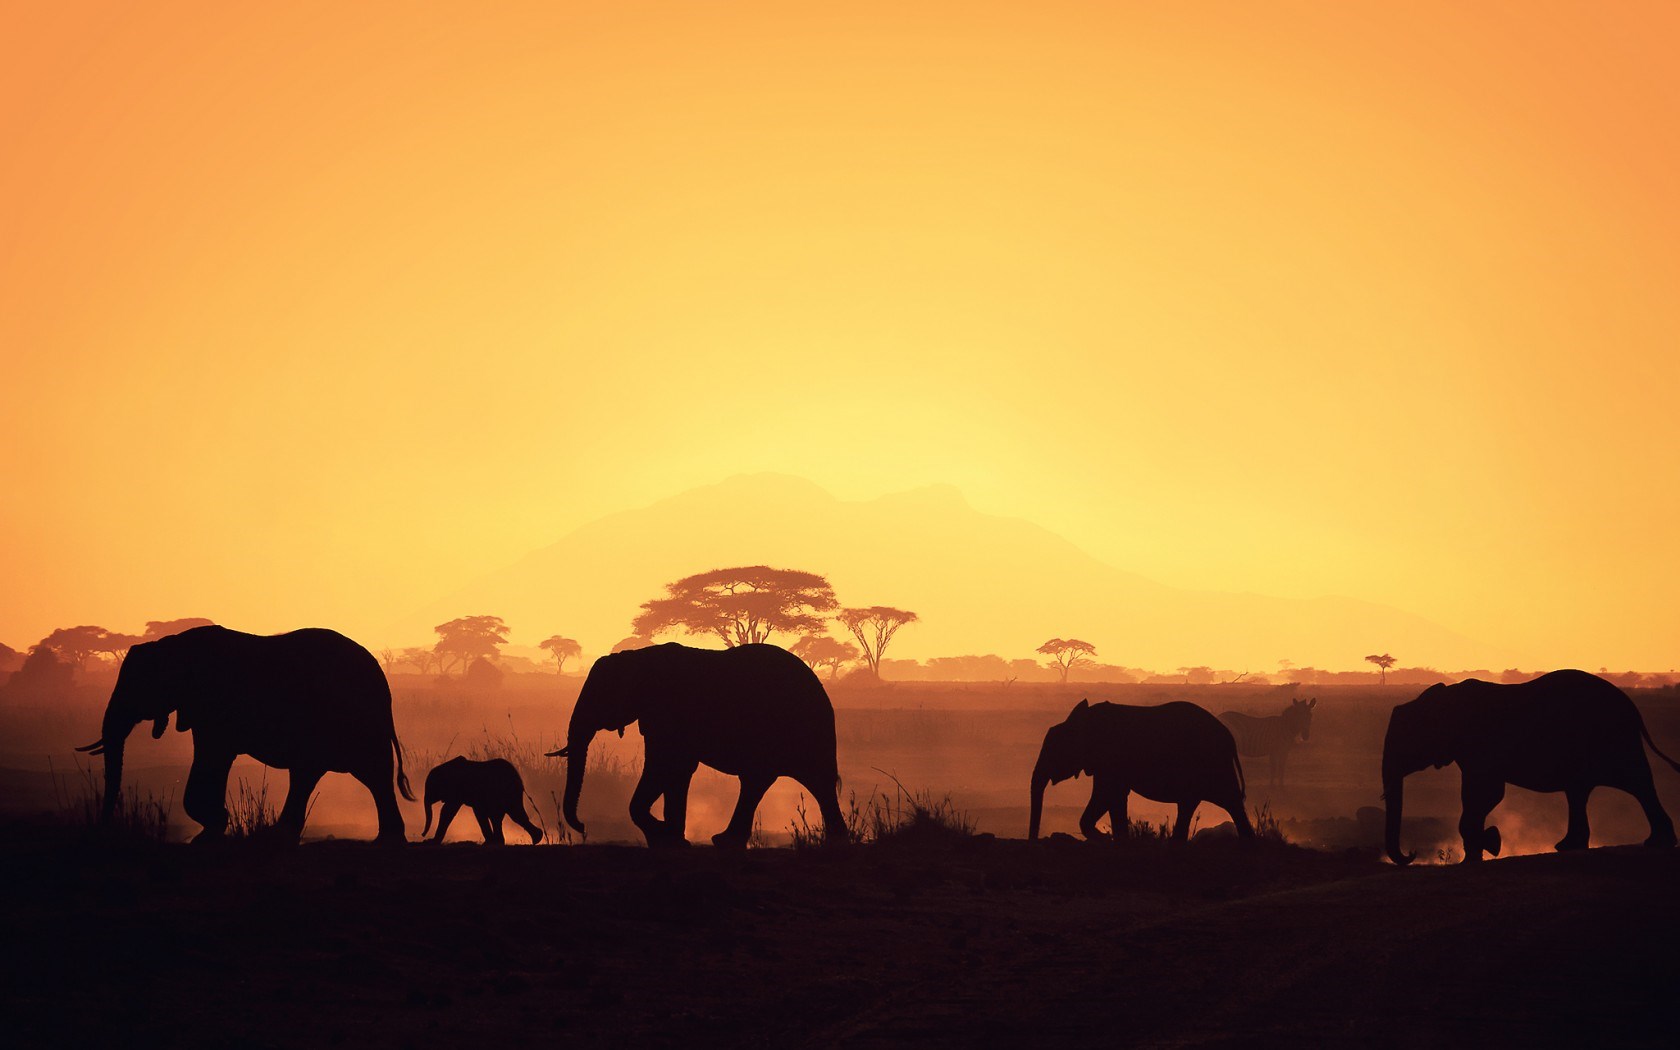 áfrica fondo de pantalla,elefante,elefantes y mamuts,fauna silvestre,cielo,elefante africano